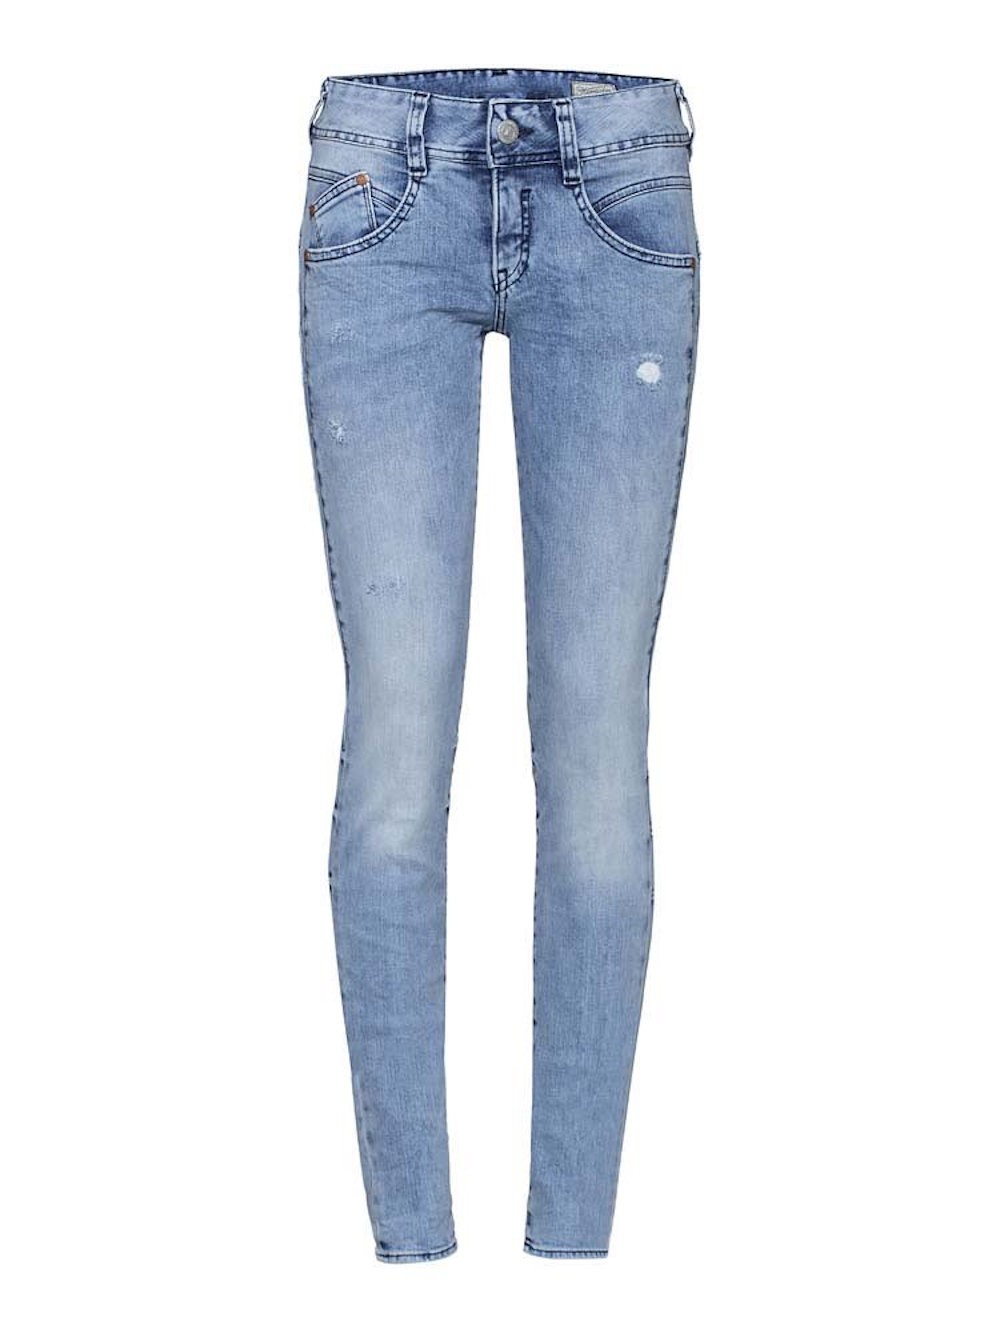 Mode Jeans Jeans carotte Herrlicher Jeans carotte gris ardoise-bleu style d\u00e9contract\u00e9 